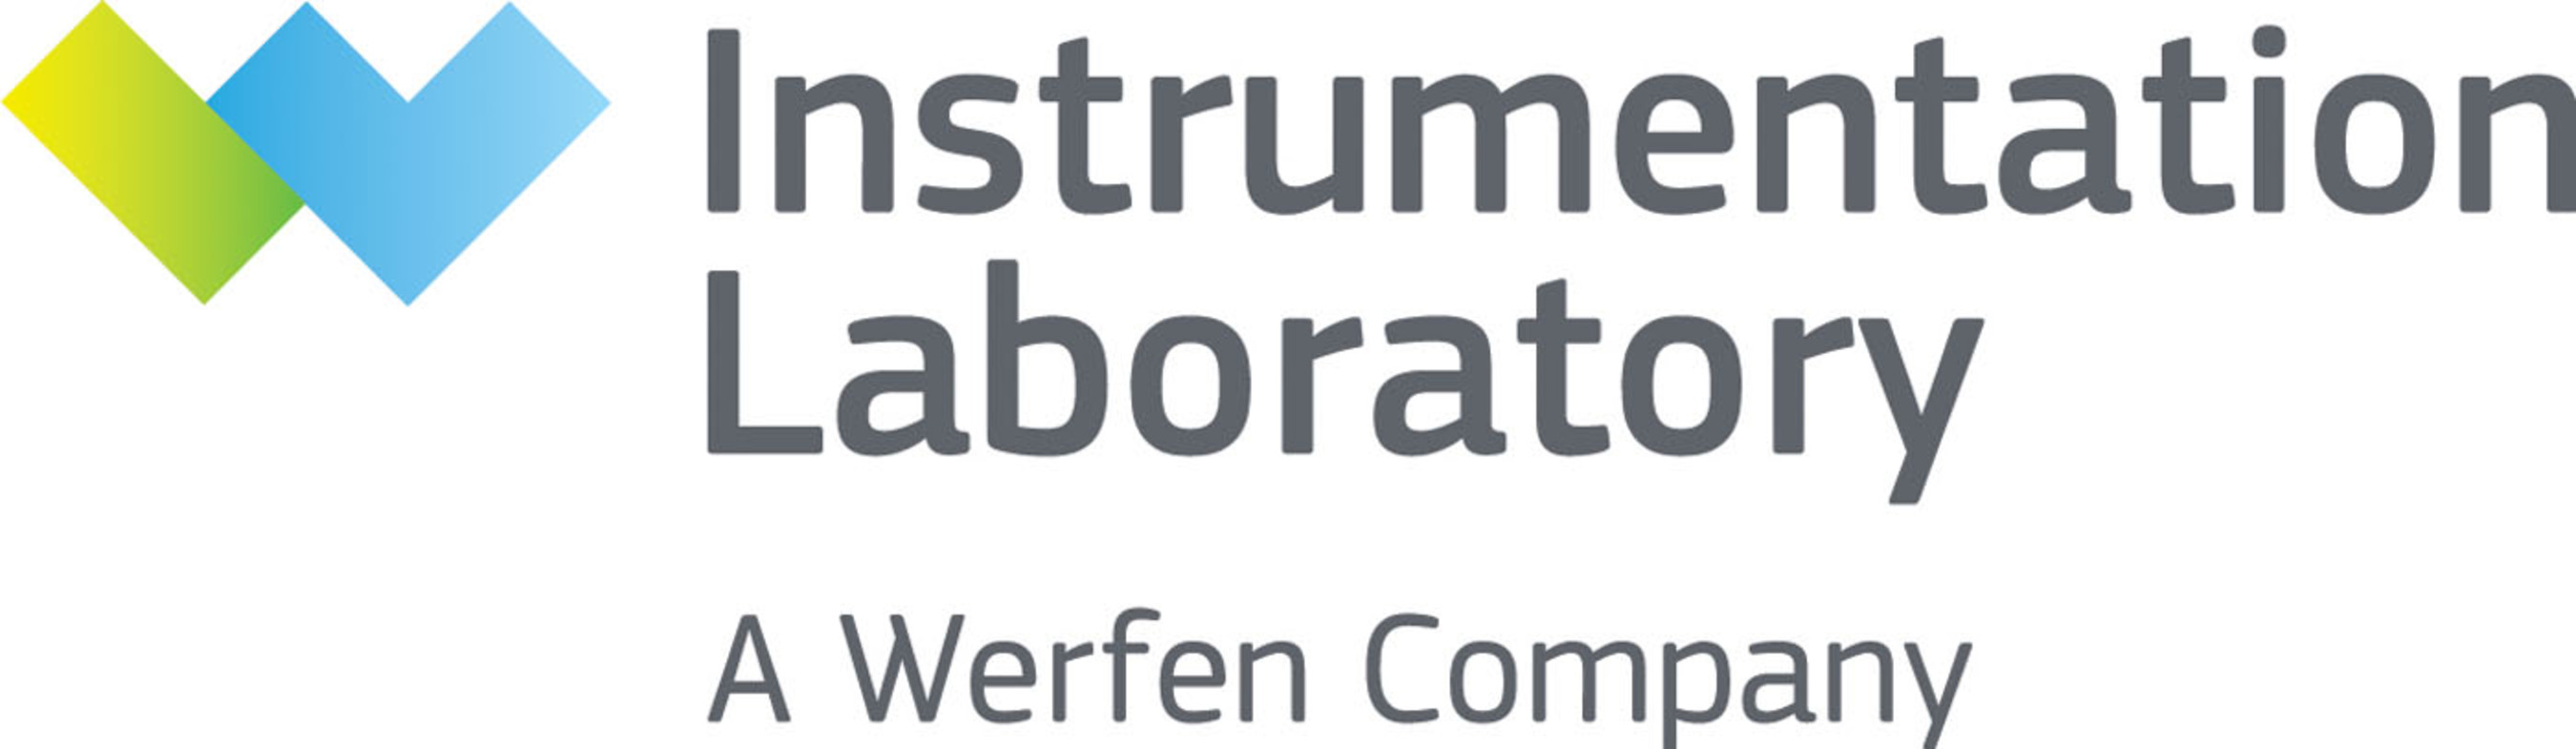 Instrumentation Laboratory logo. (PRNewsFoto/Instrumentation Laboratory) (PRNewsFoto/INSTRUMENTATION LABORATORY)